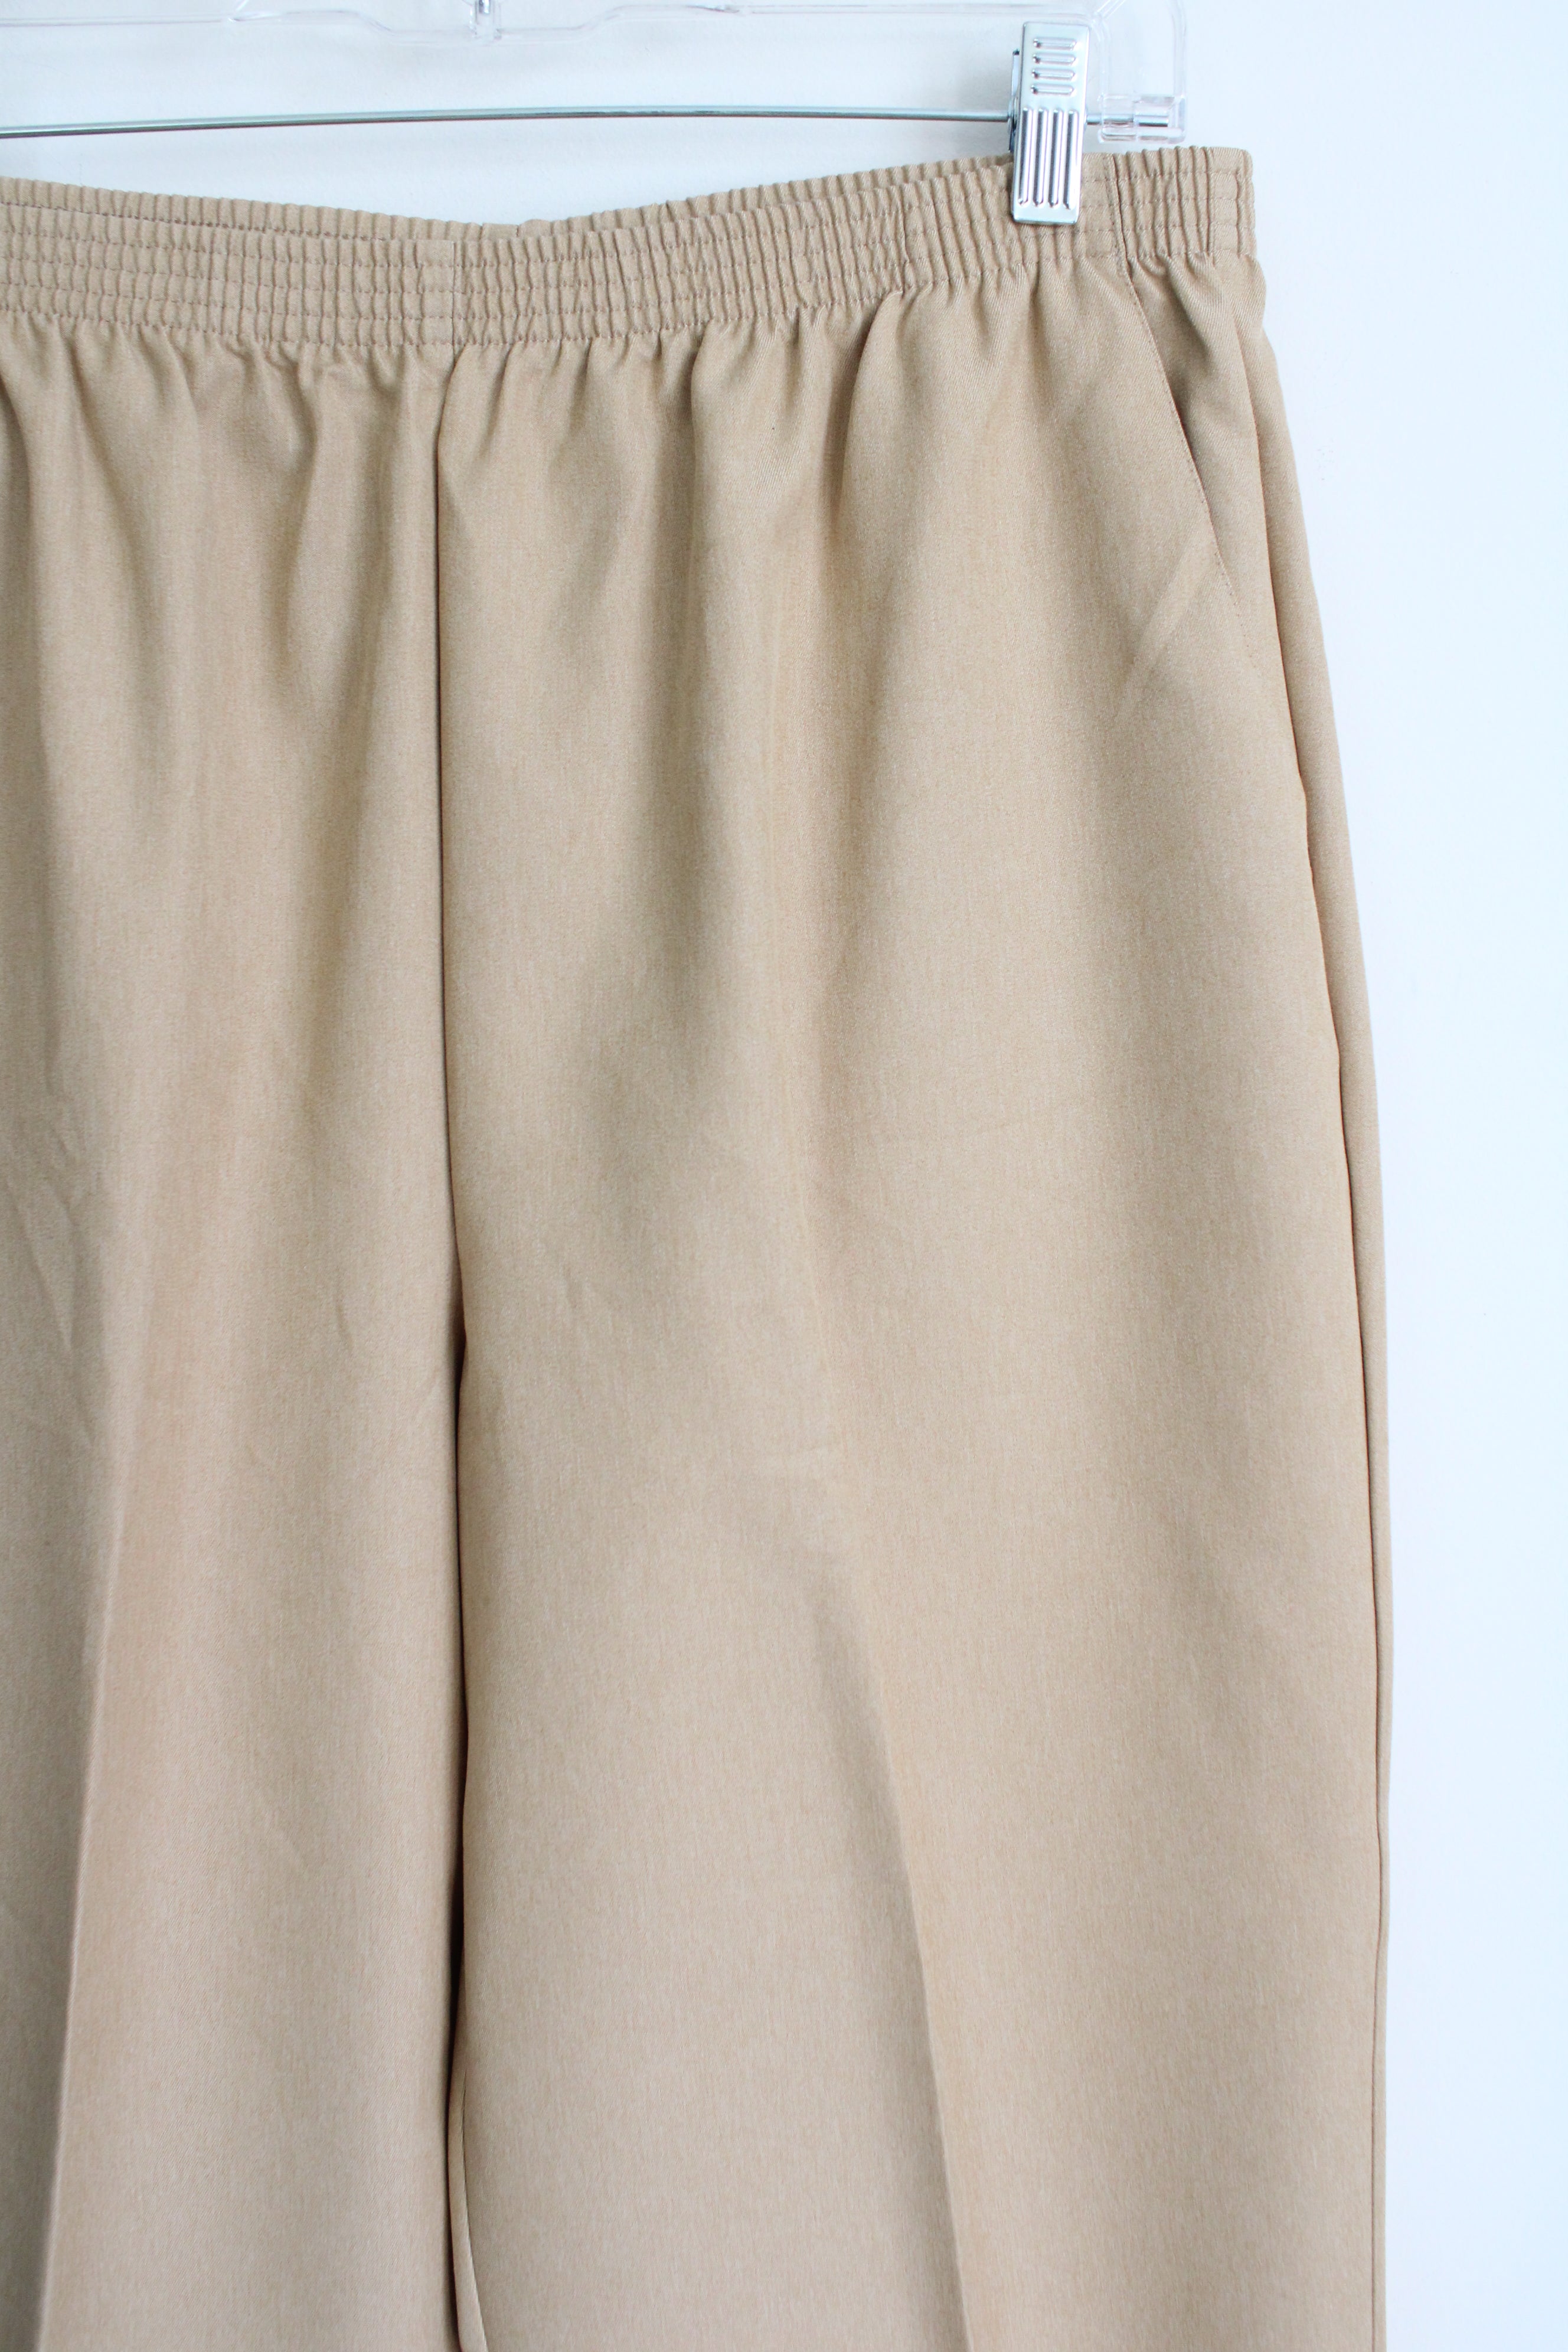 NEW Alfred Dunner Tan Trouser Pants | 16 Petite